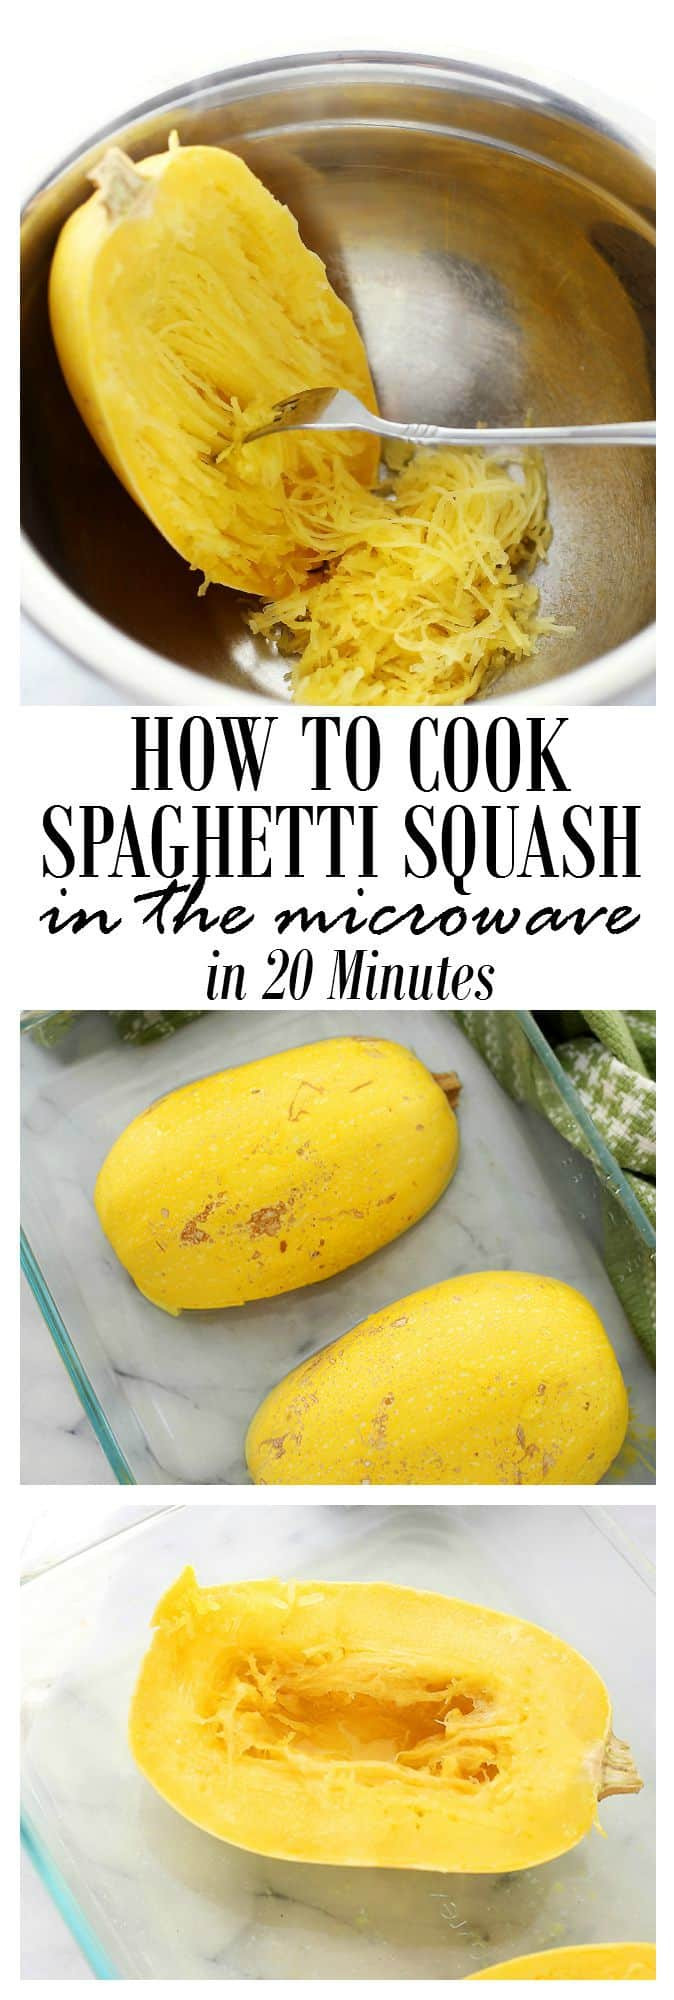 Spaghetti Squash Microwave Whole
 Mediterranean Spaghetti Squash Boats